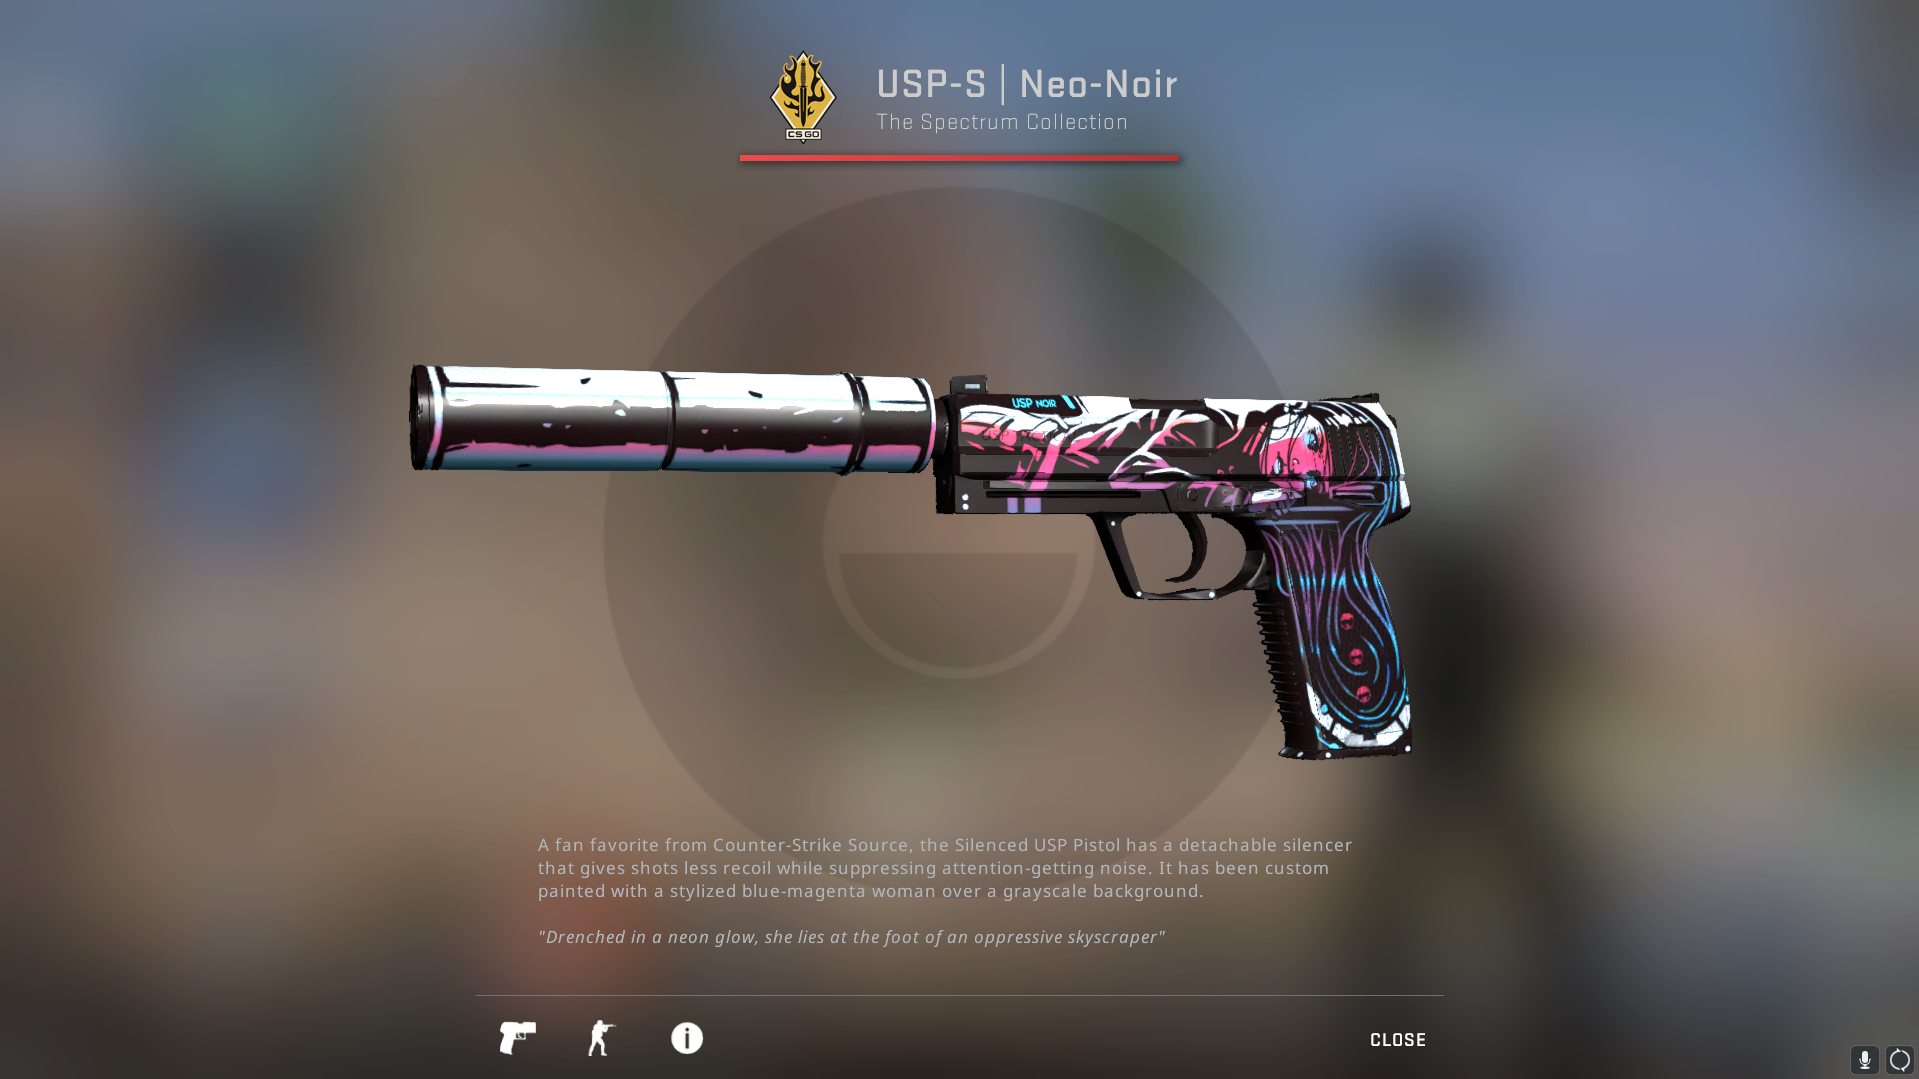 USP-S Neo Noir